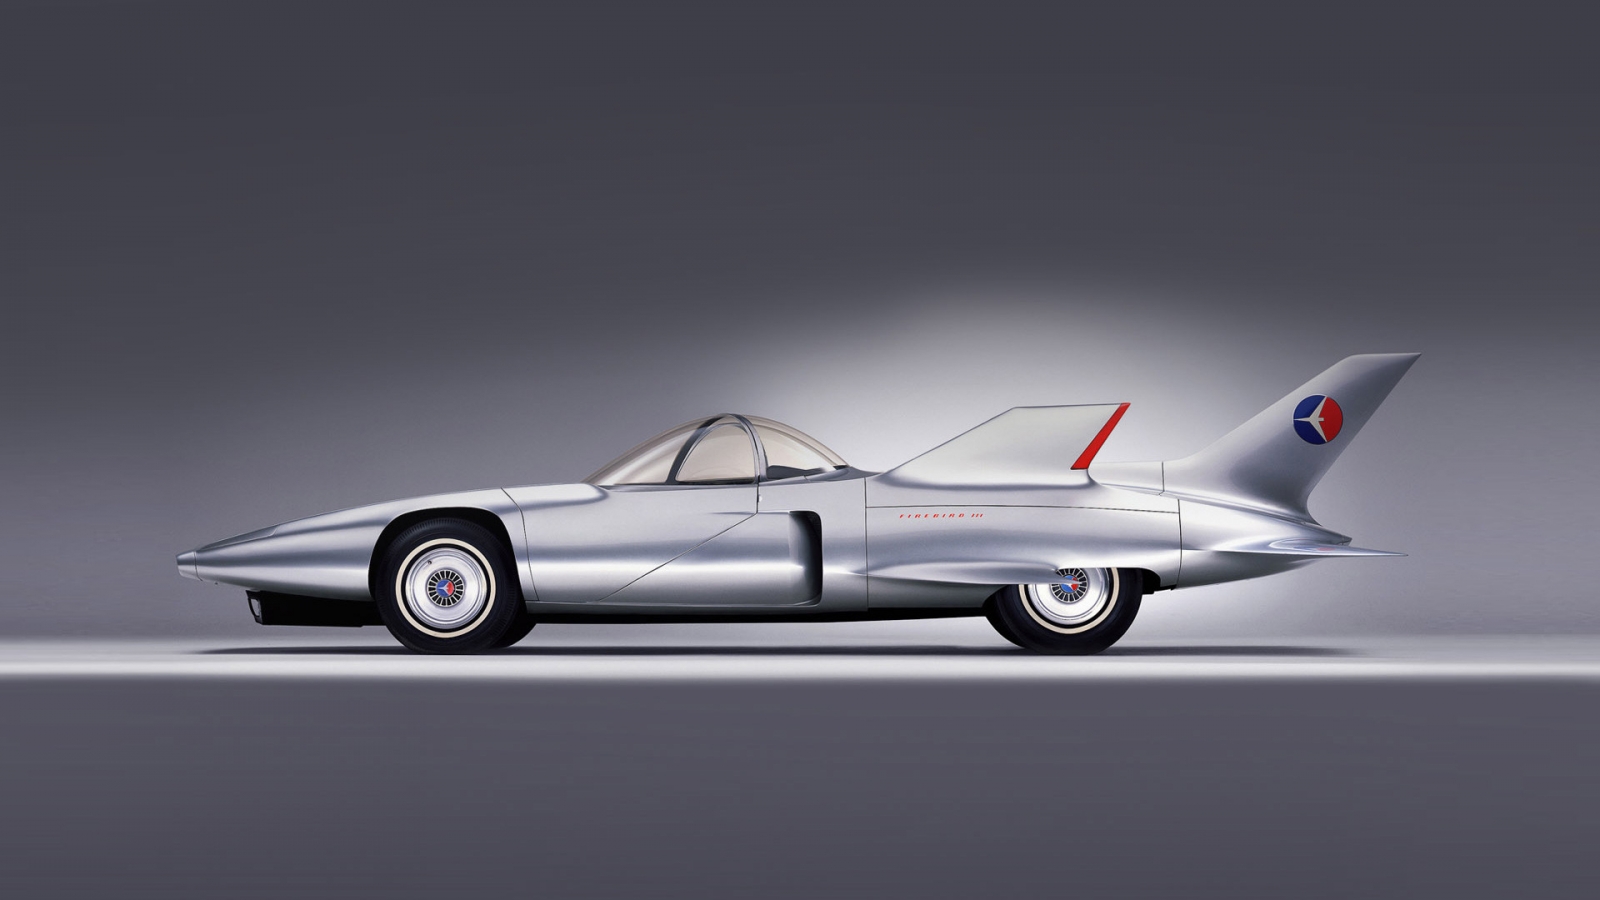 GM Firebird Concept Car 1958 for 1600 x 900 HDTV resolution